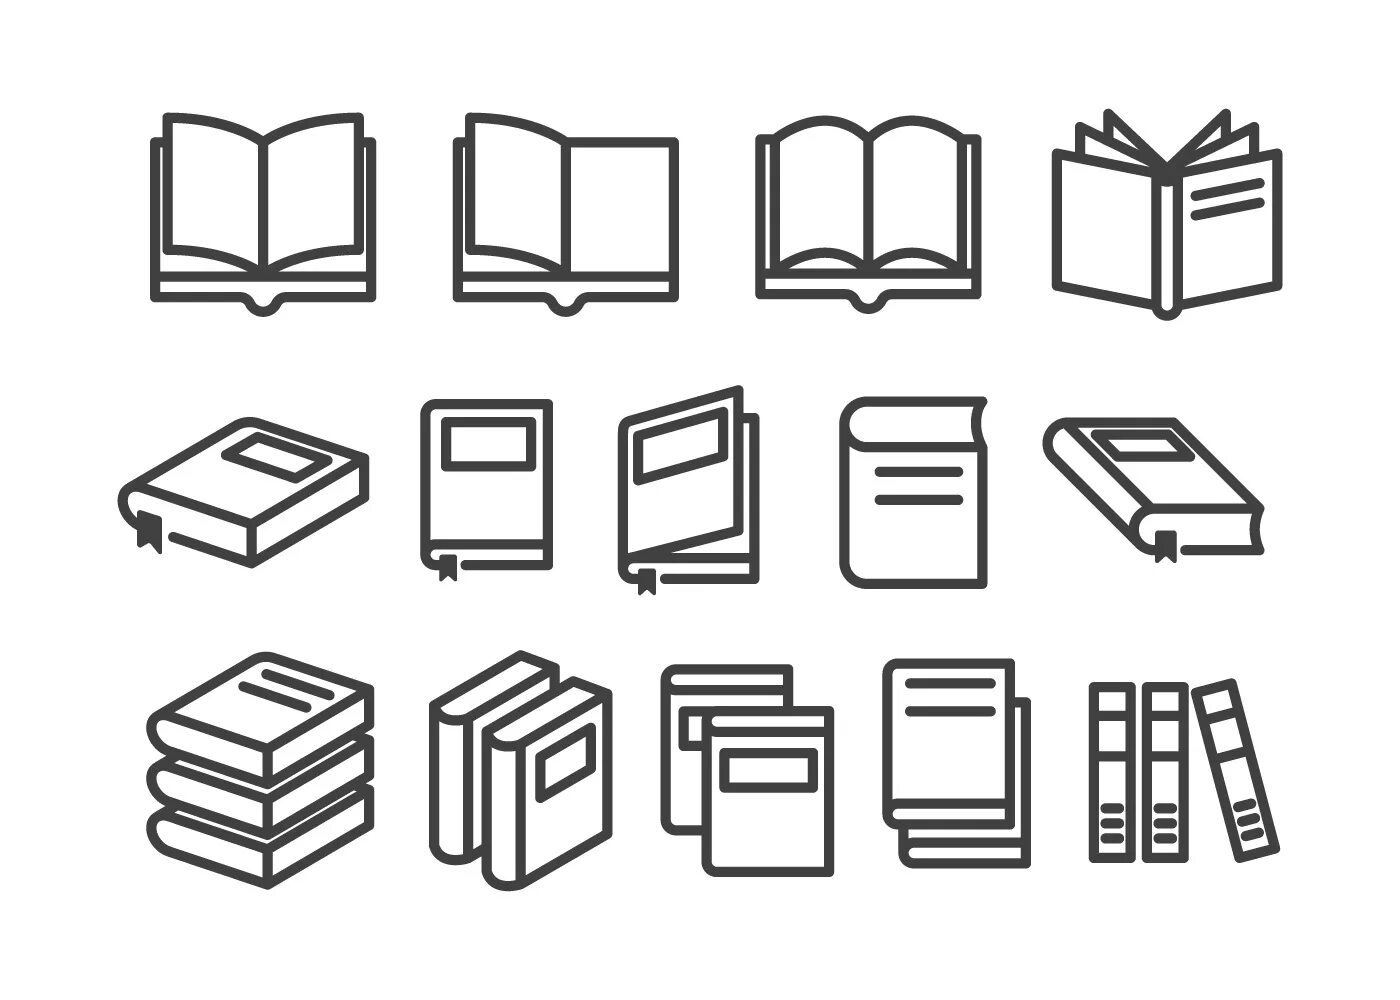 Icons library. Пиктограмма библиотека. Библиотечные иконки. Значок библиотеки. Библиотека вектор.